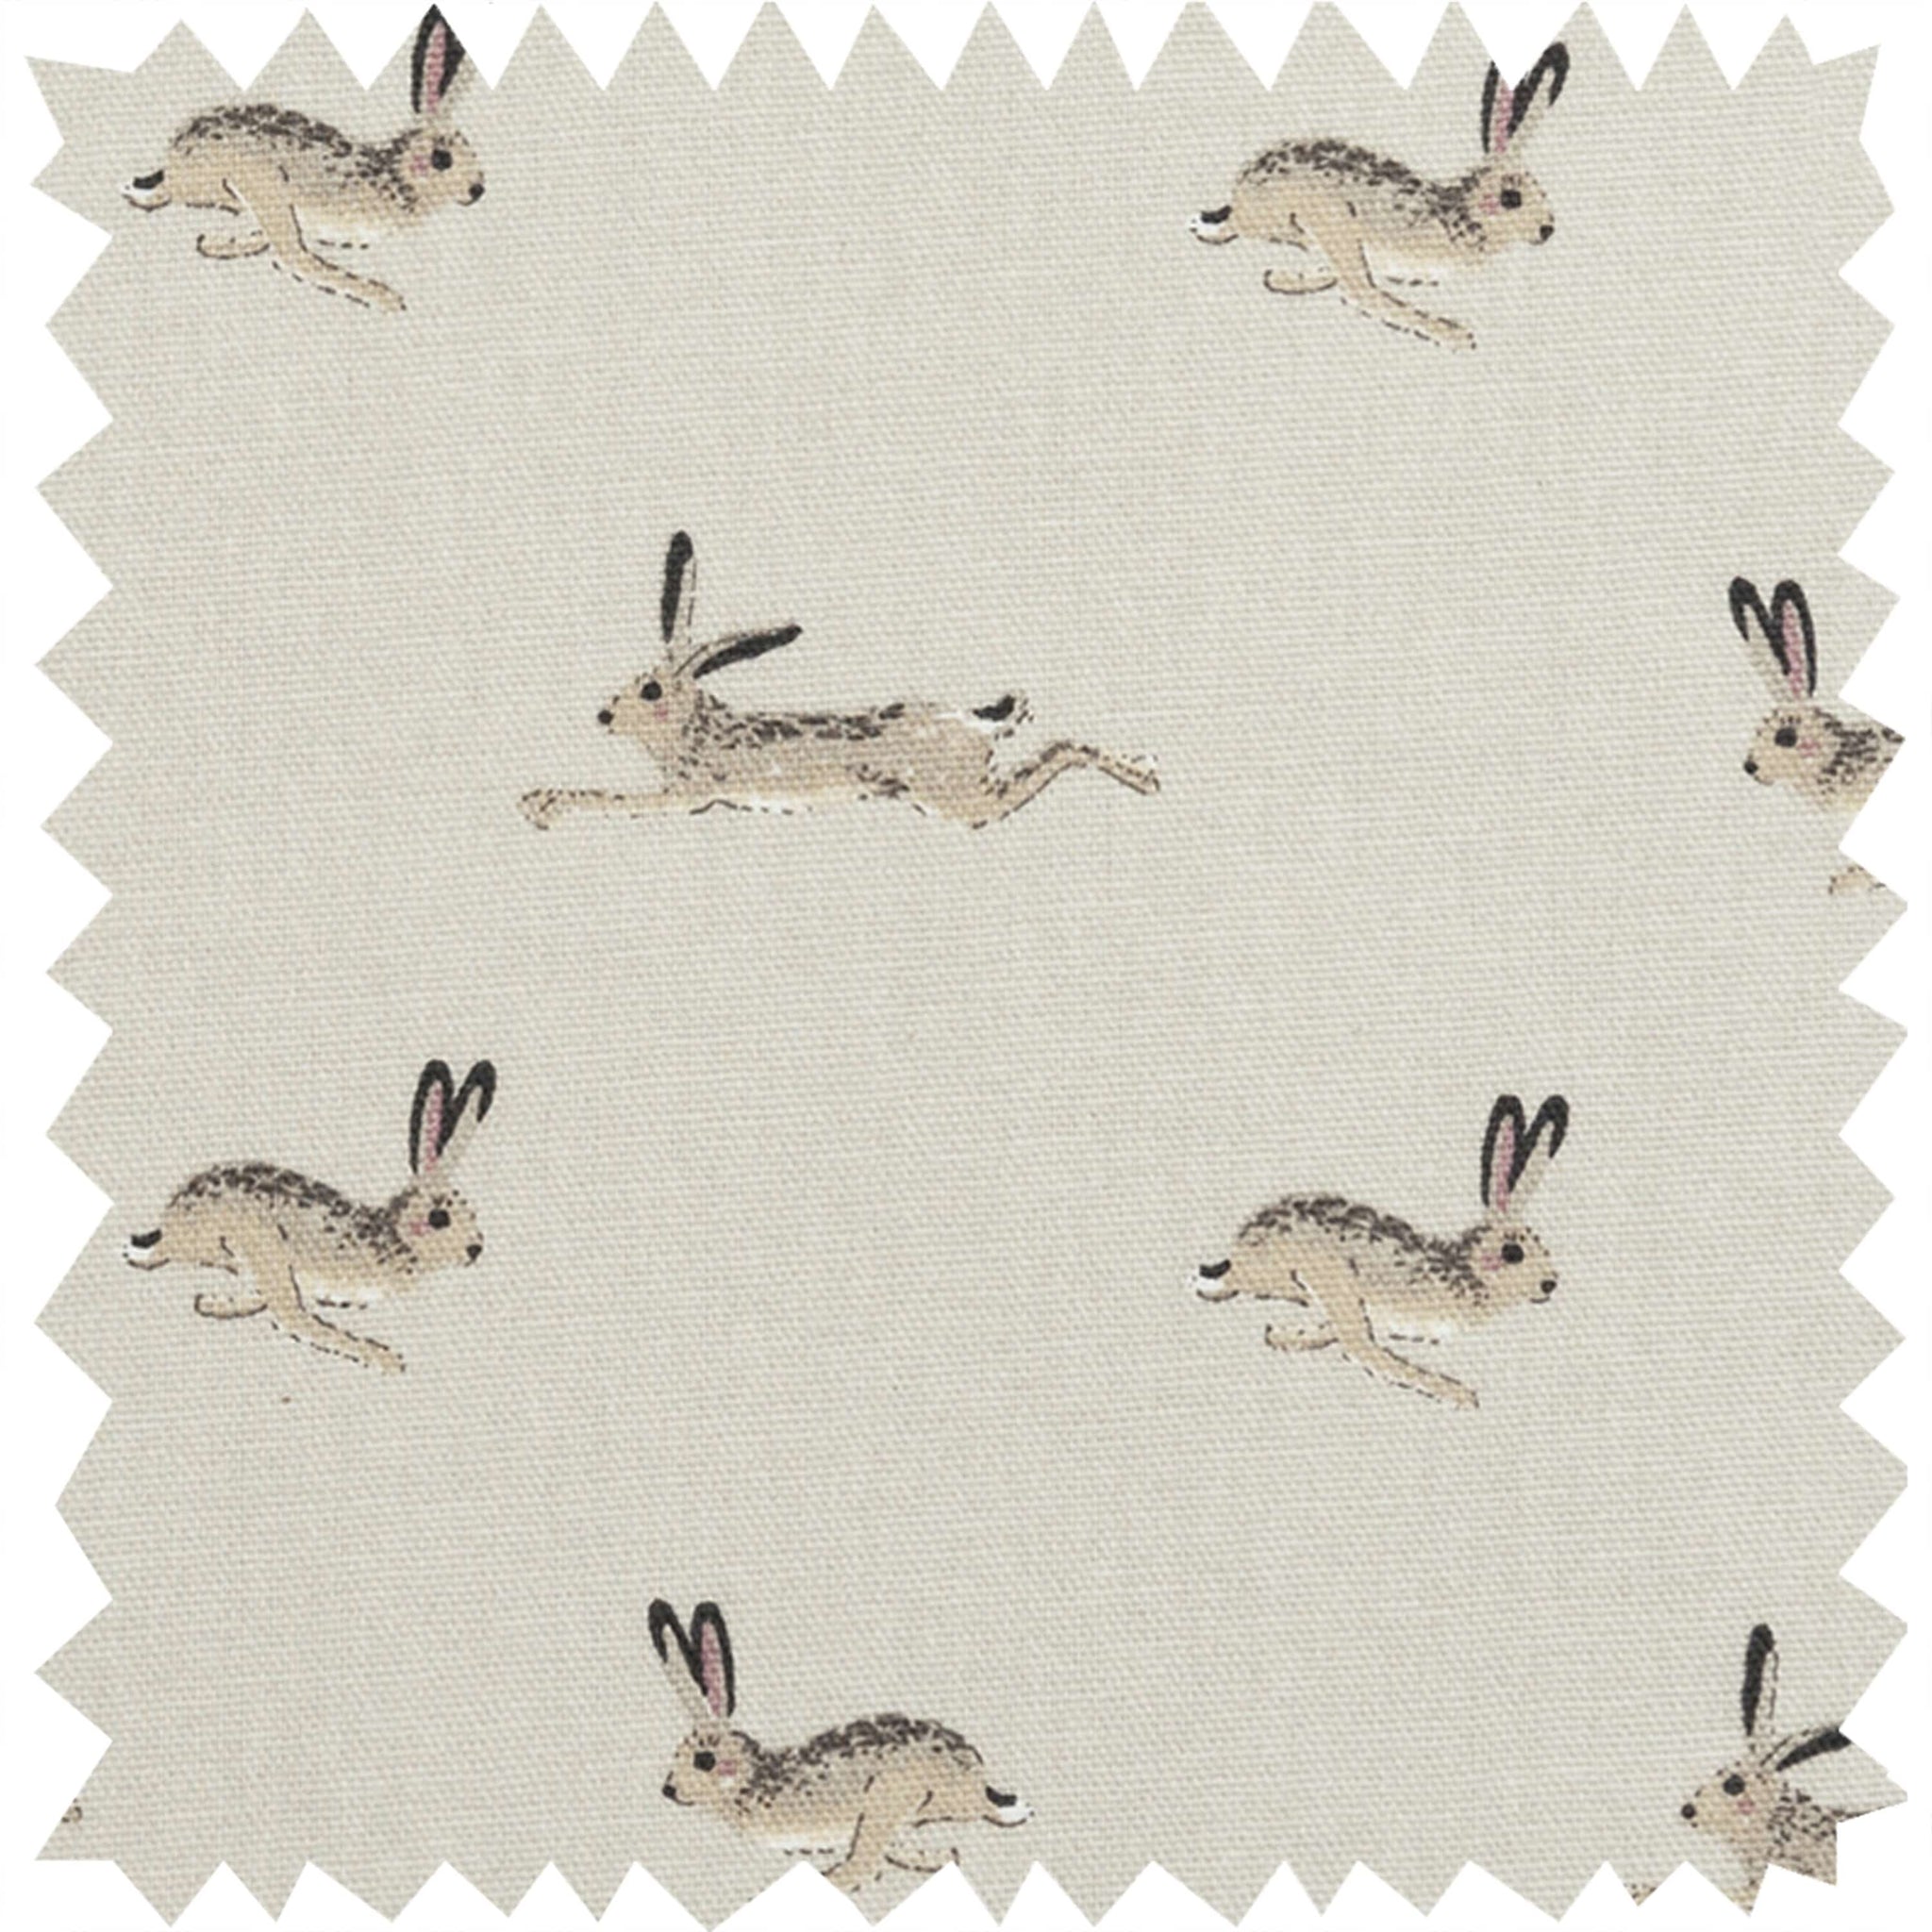 Hare Circular Hob Cover